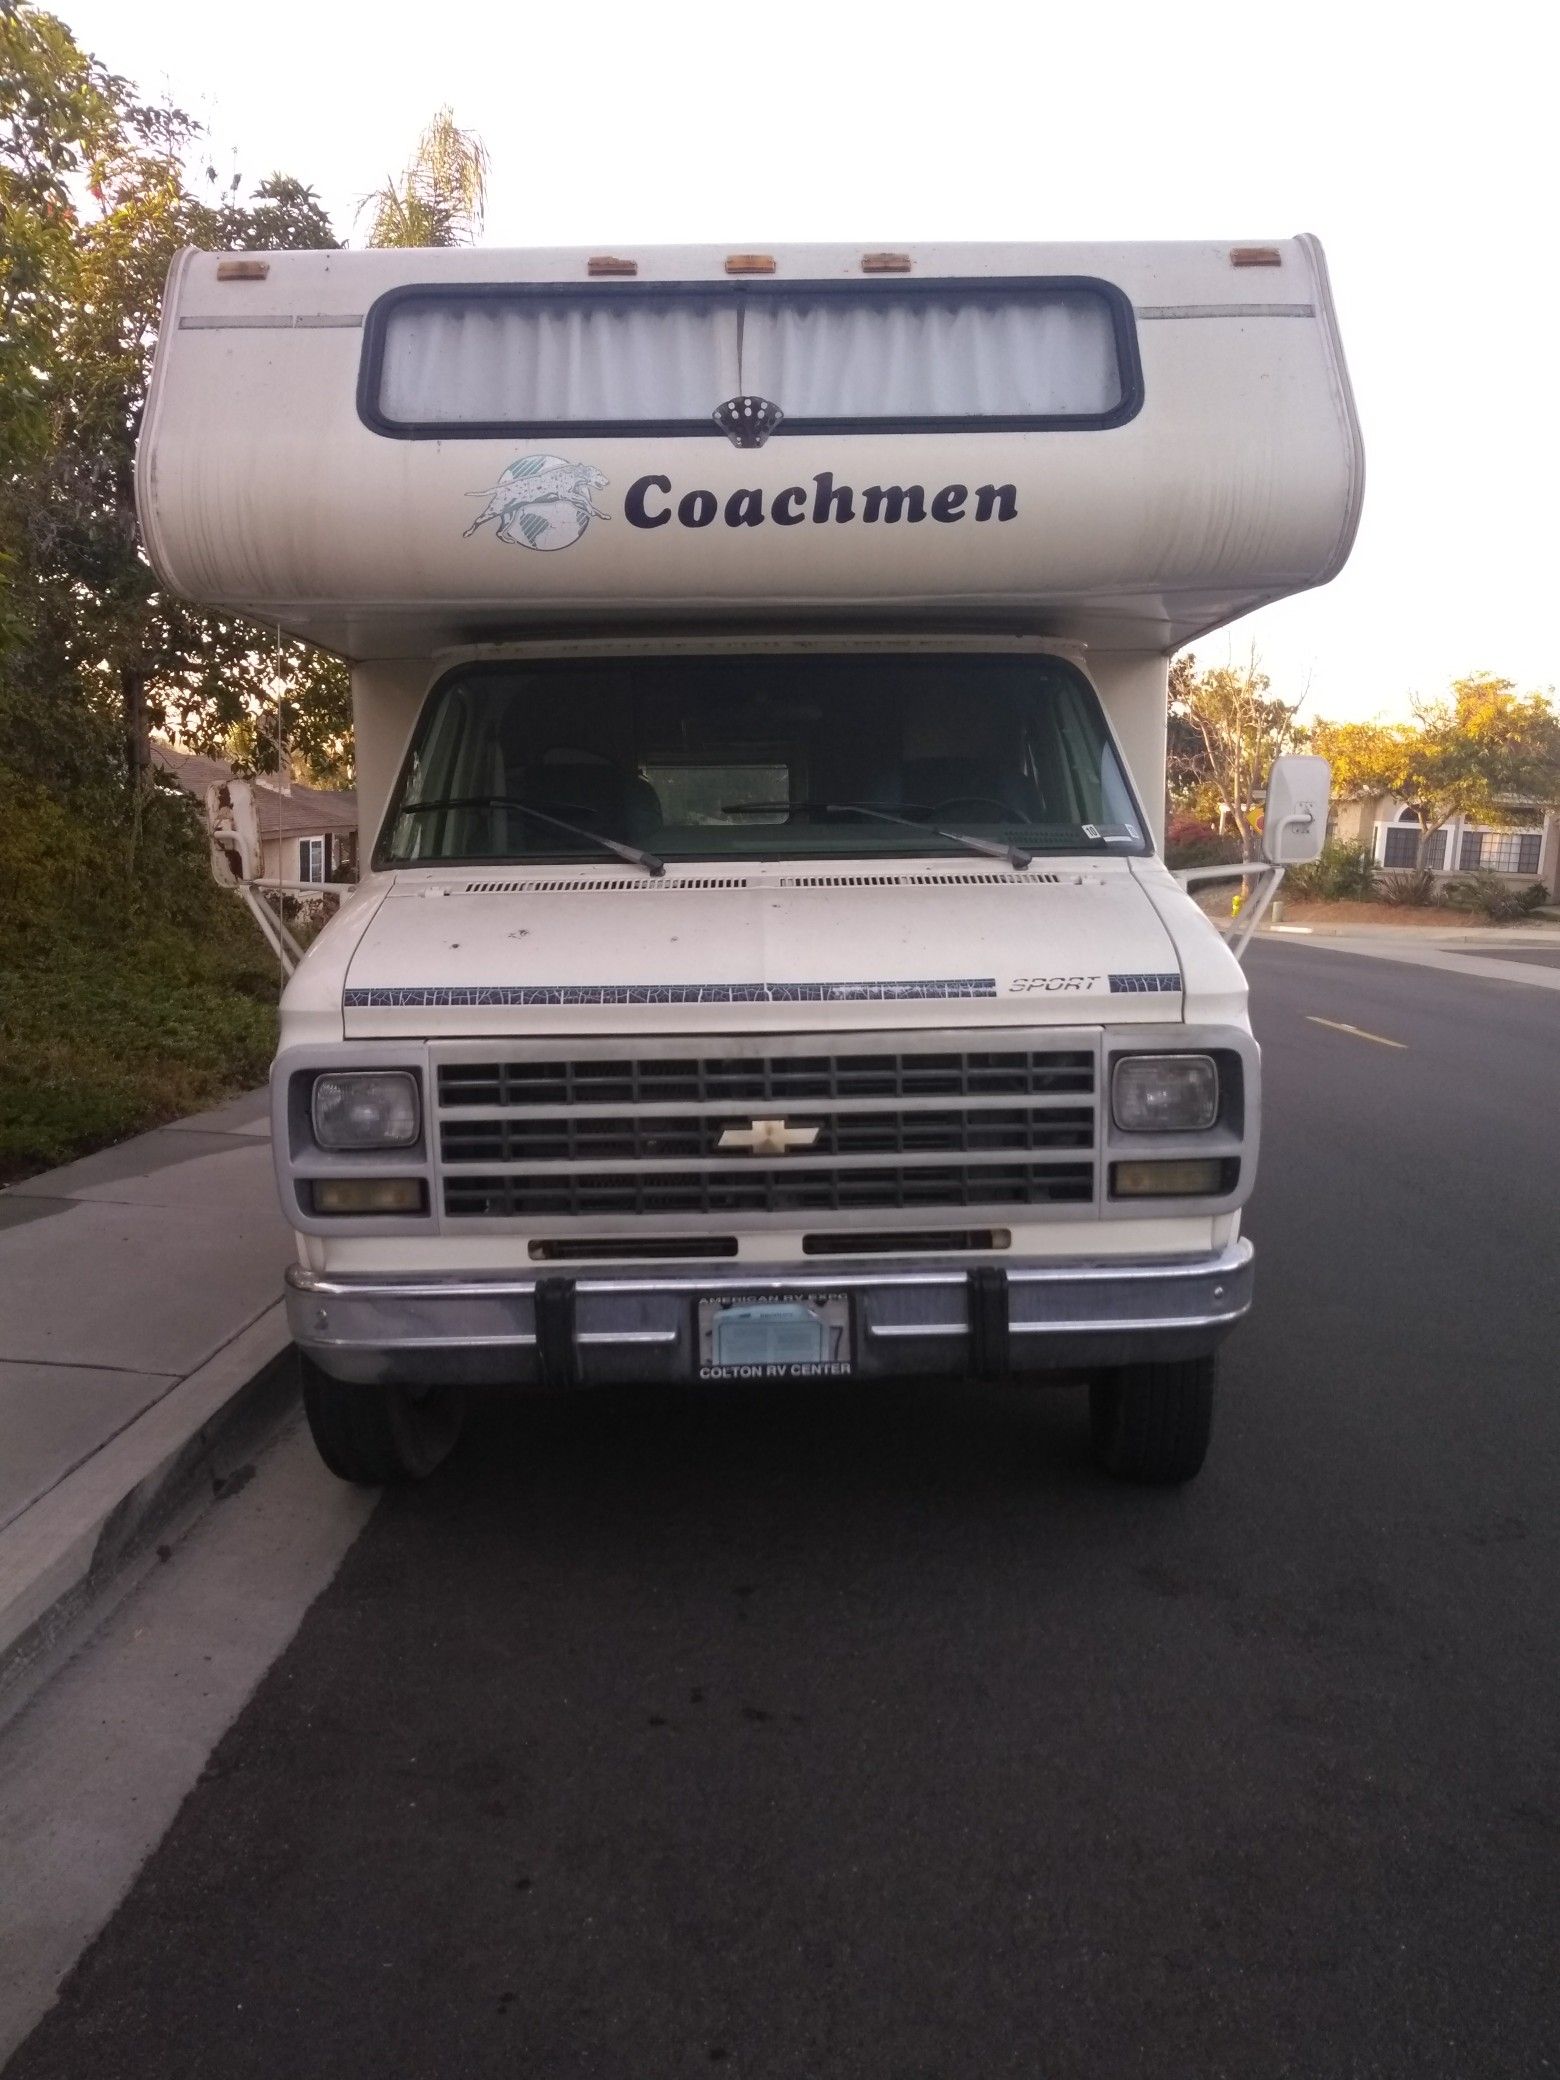 1993 Chevy Coachmen RV